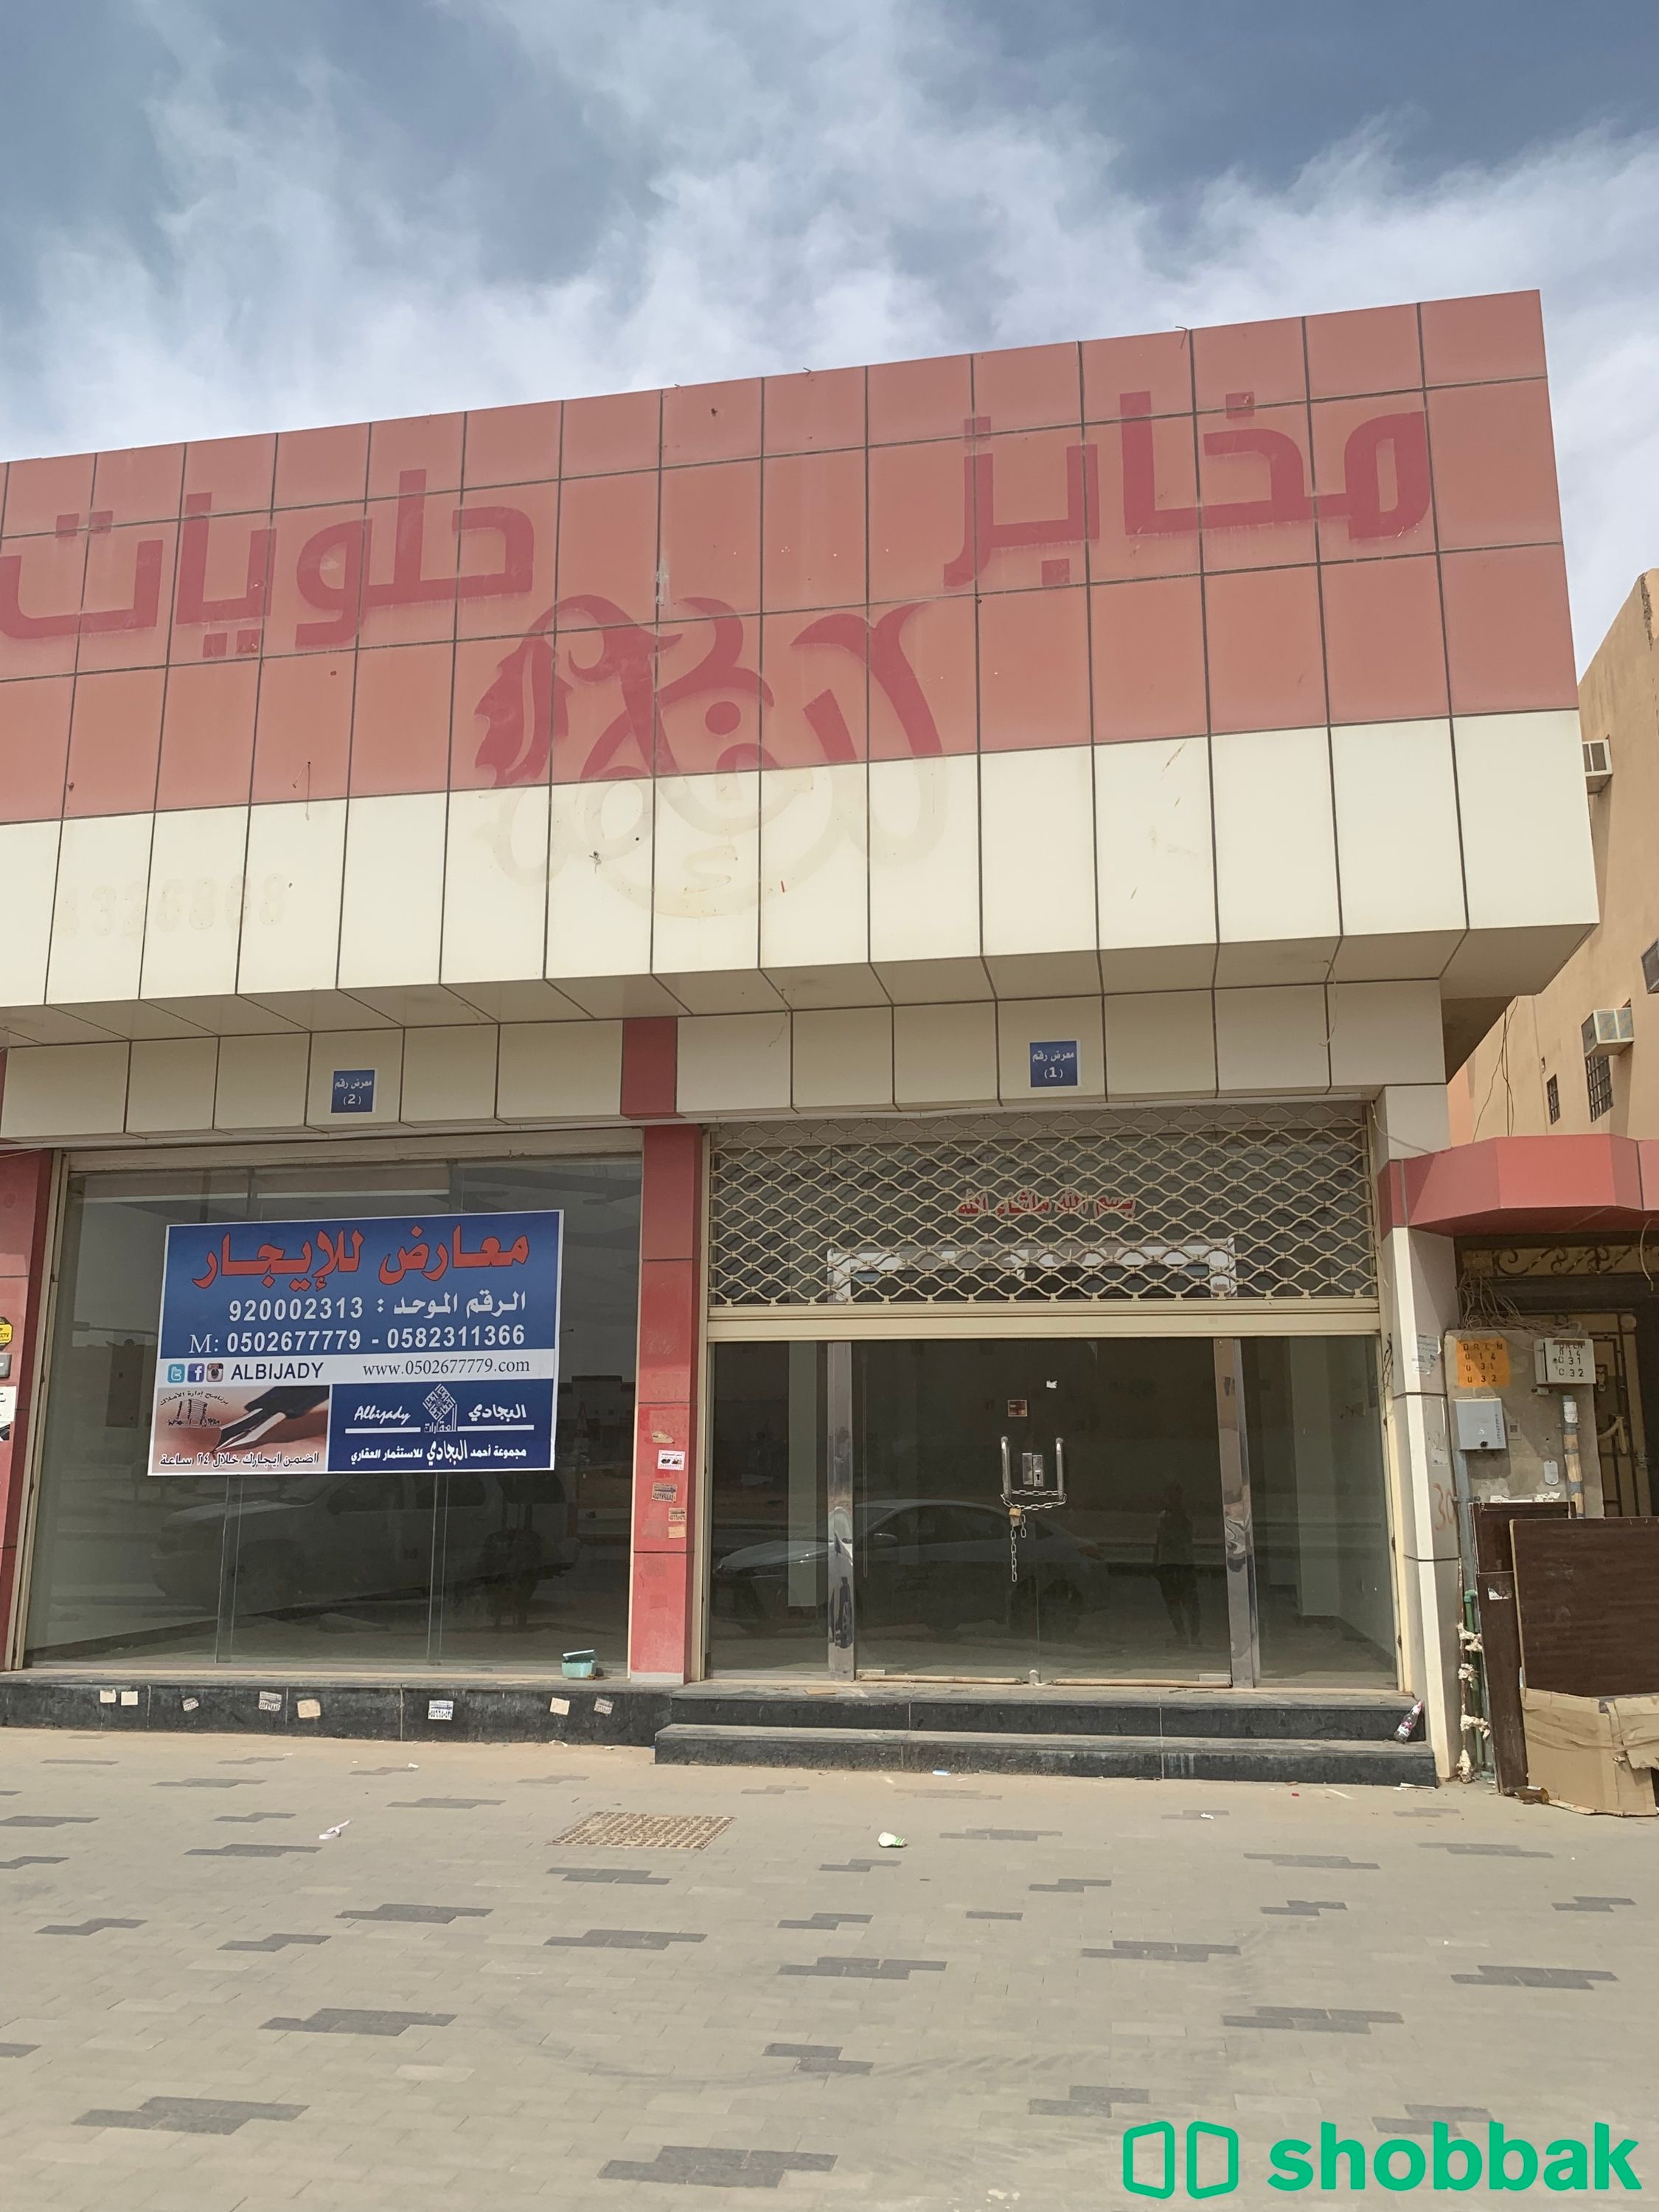 محل للايجار فتحه 1، 2 | حي لبن  Shobbak Saudi Arabia